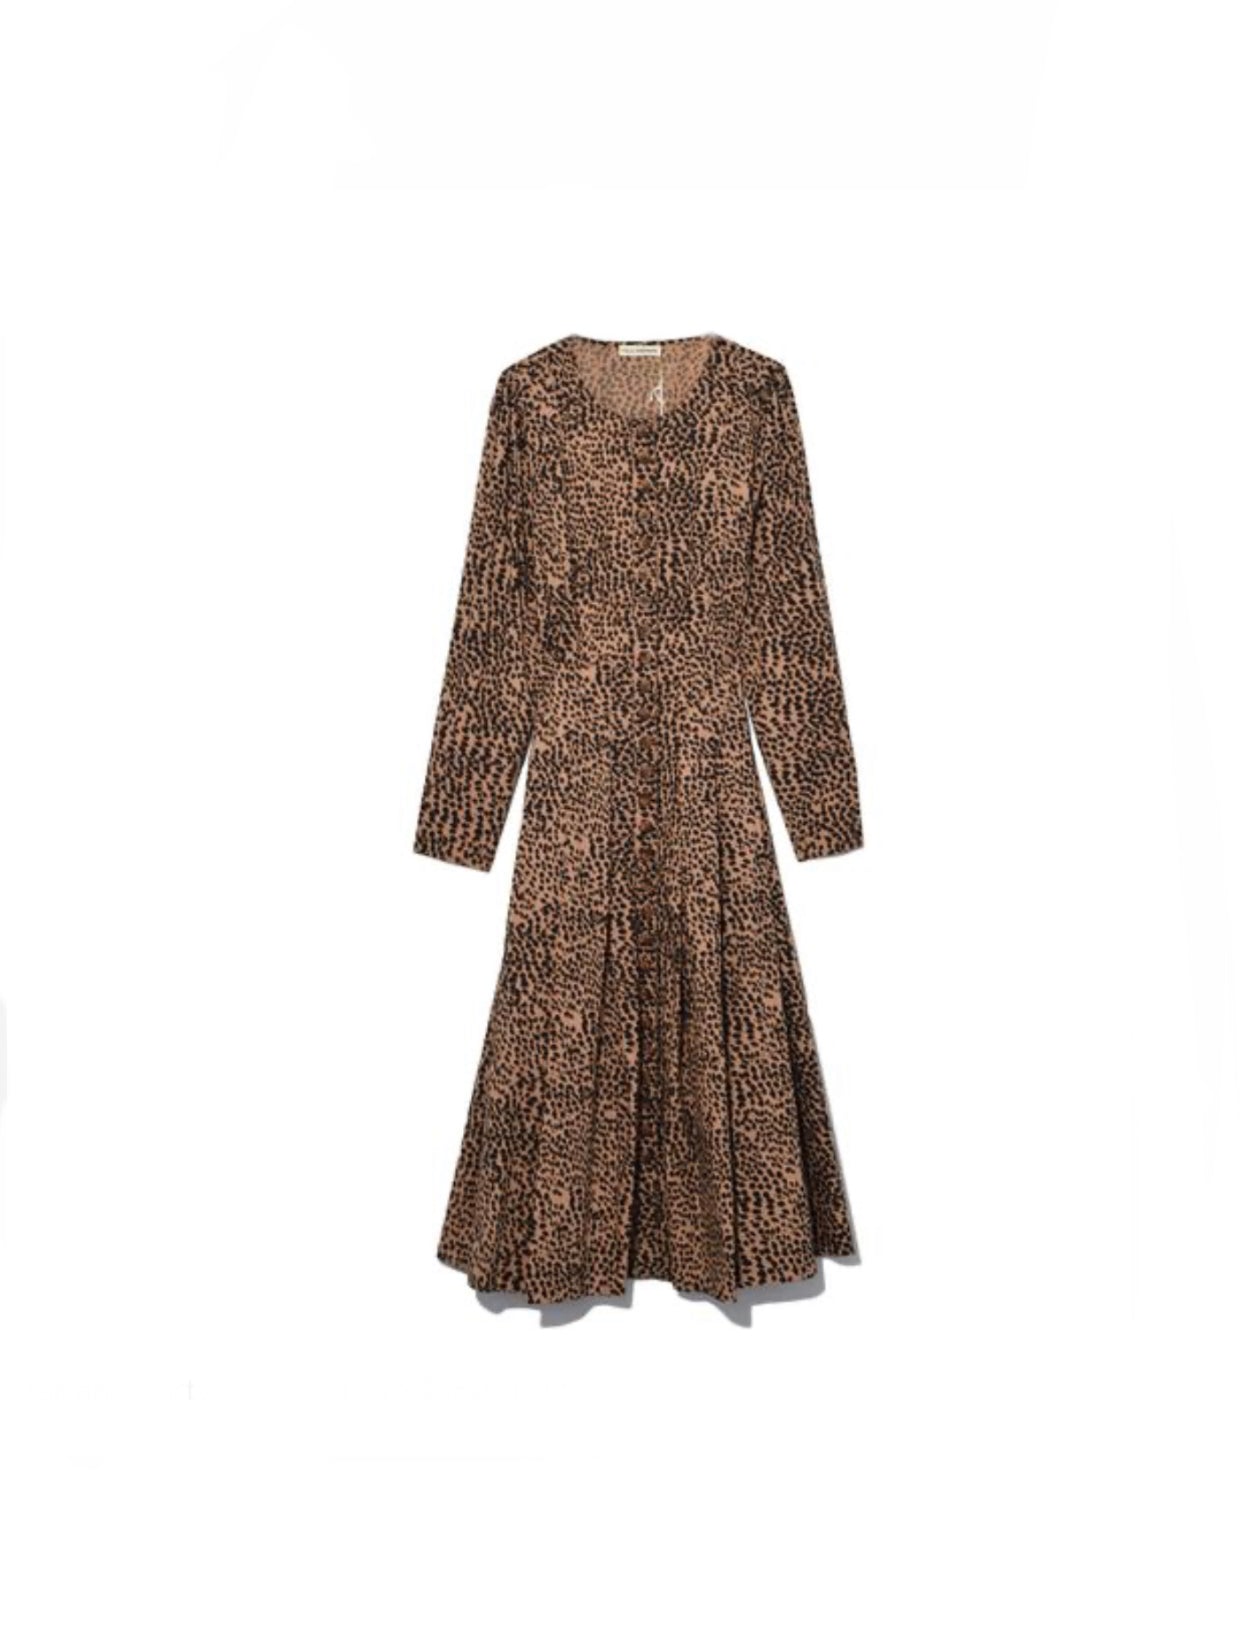 Ulla Johnson Leopard Button Through Dress